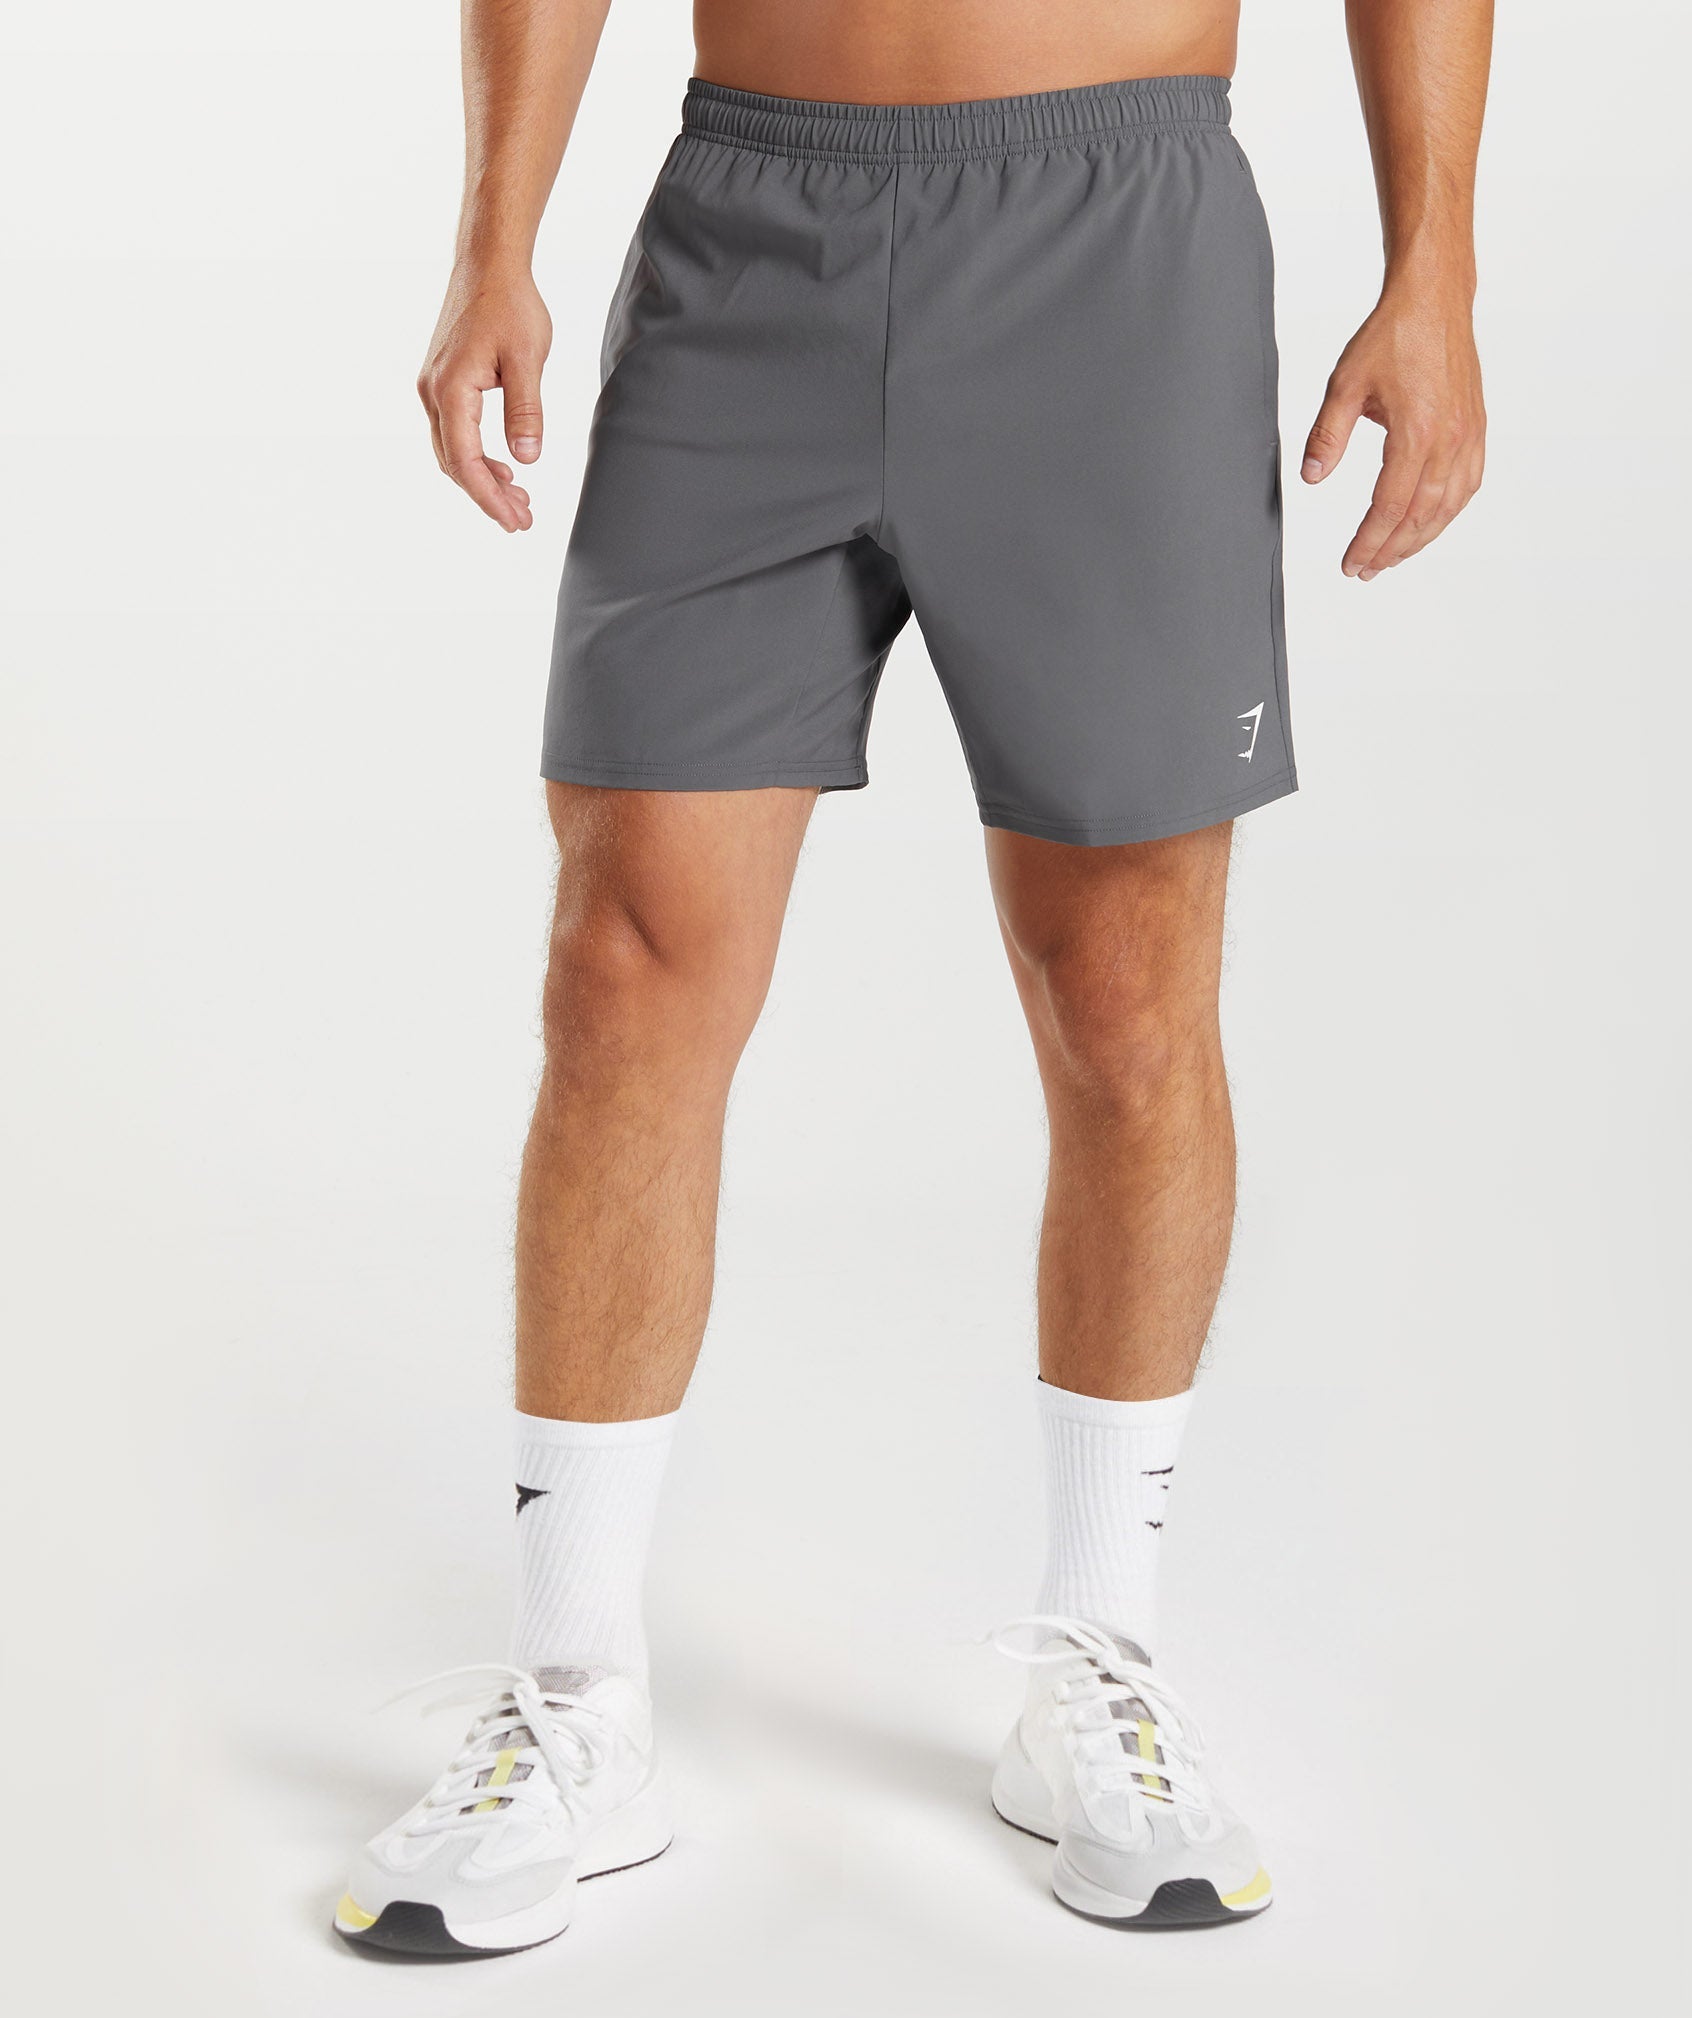 Arrival 7" Shorts dans Silhouette Greyest en rupture de stock